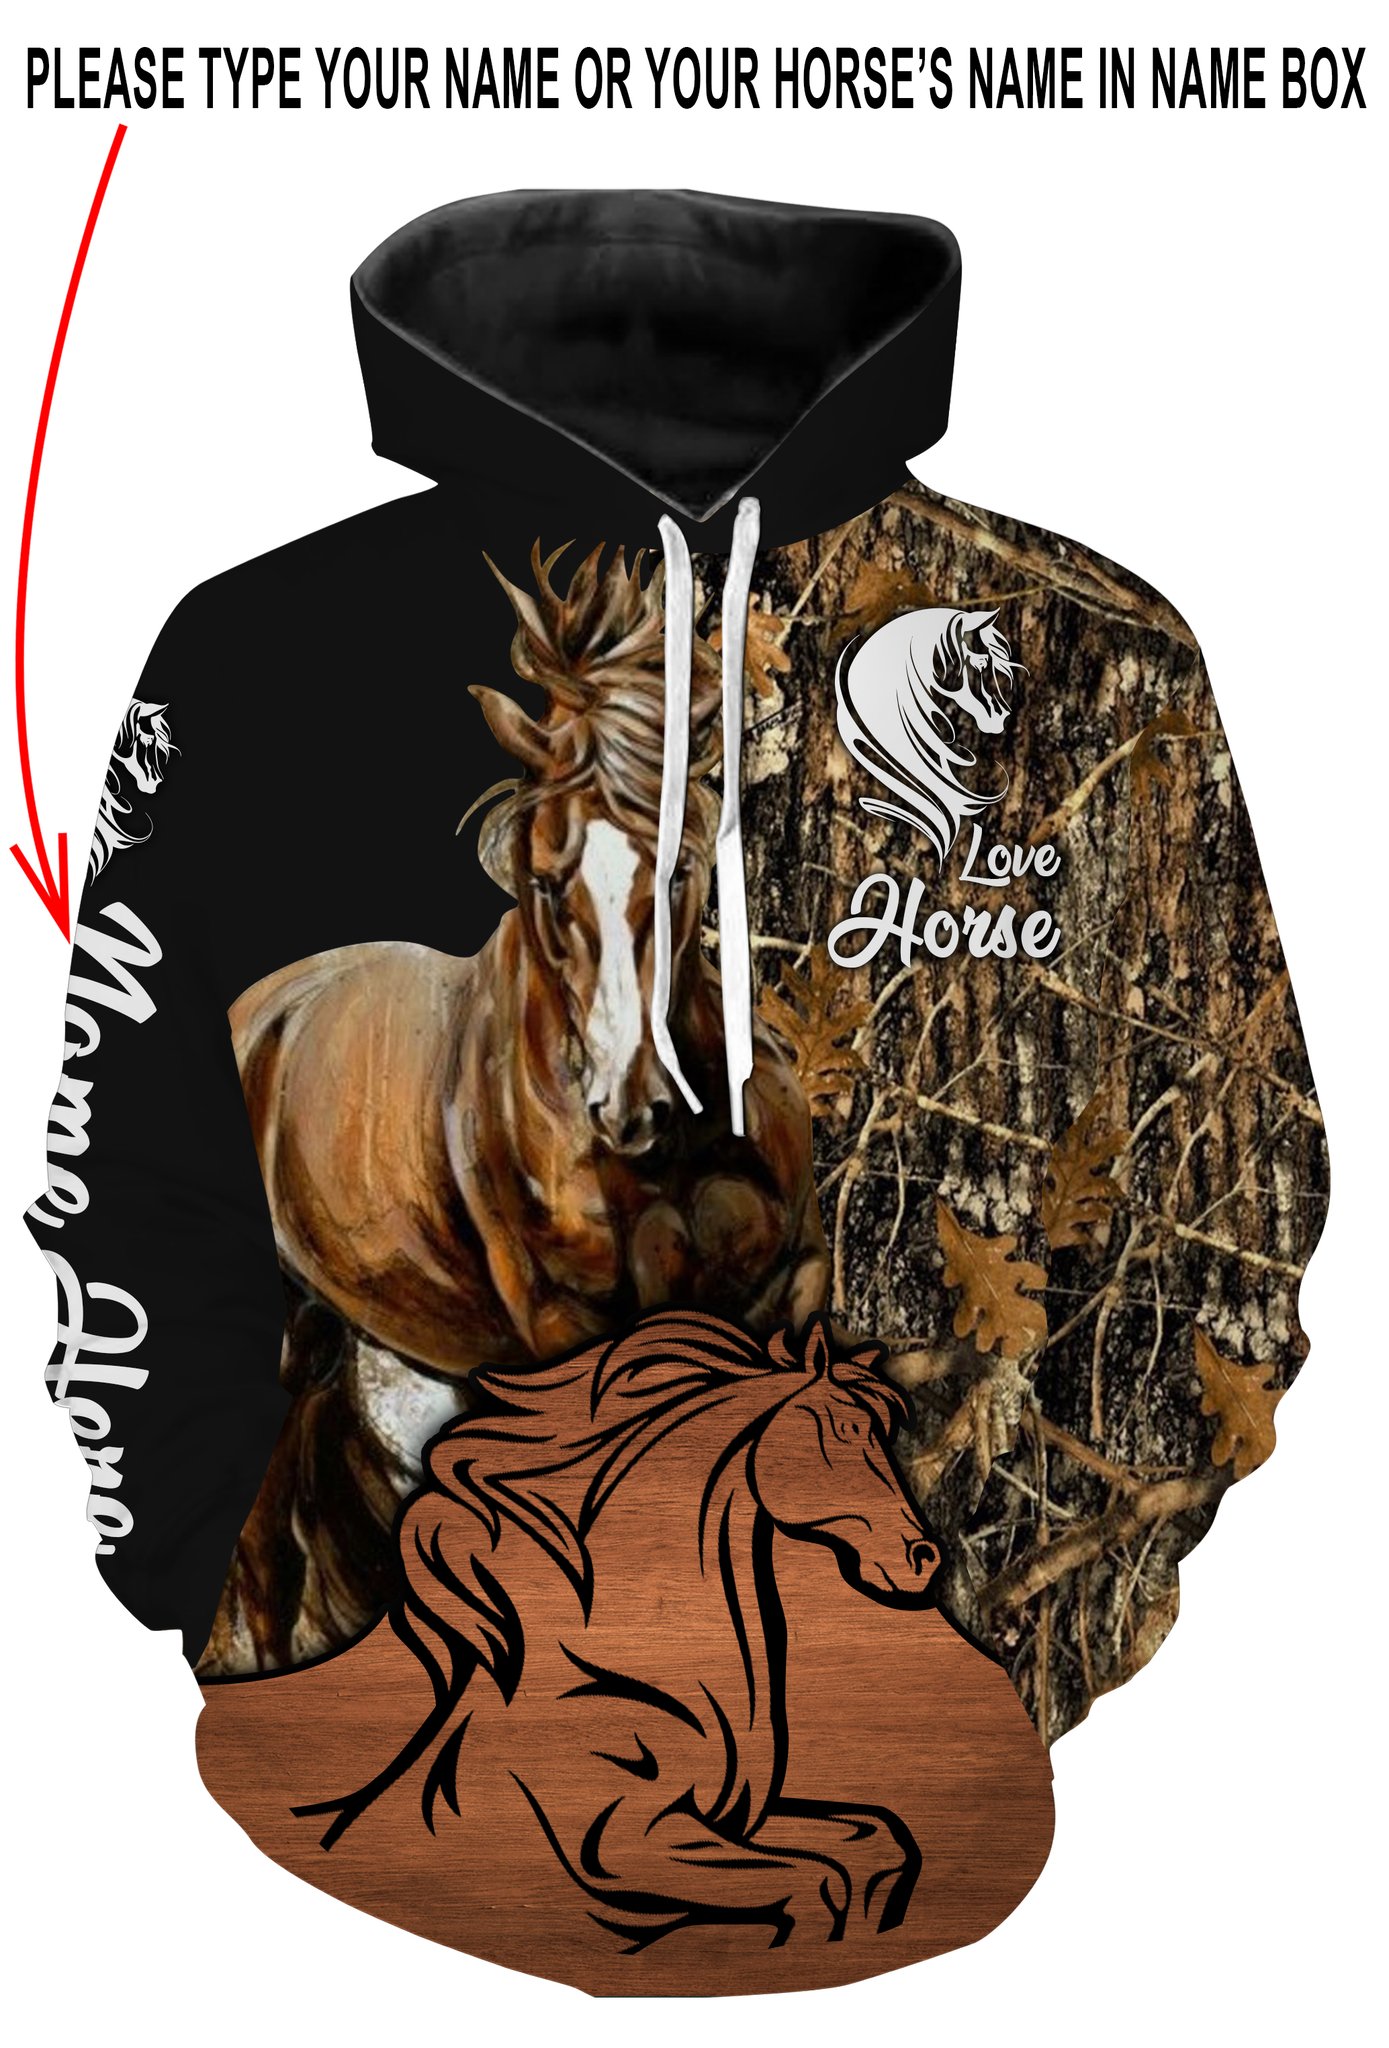 Love horse personalized full printing hoodie 1